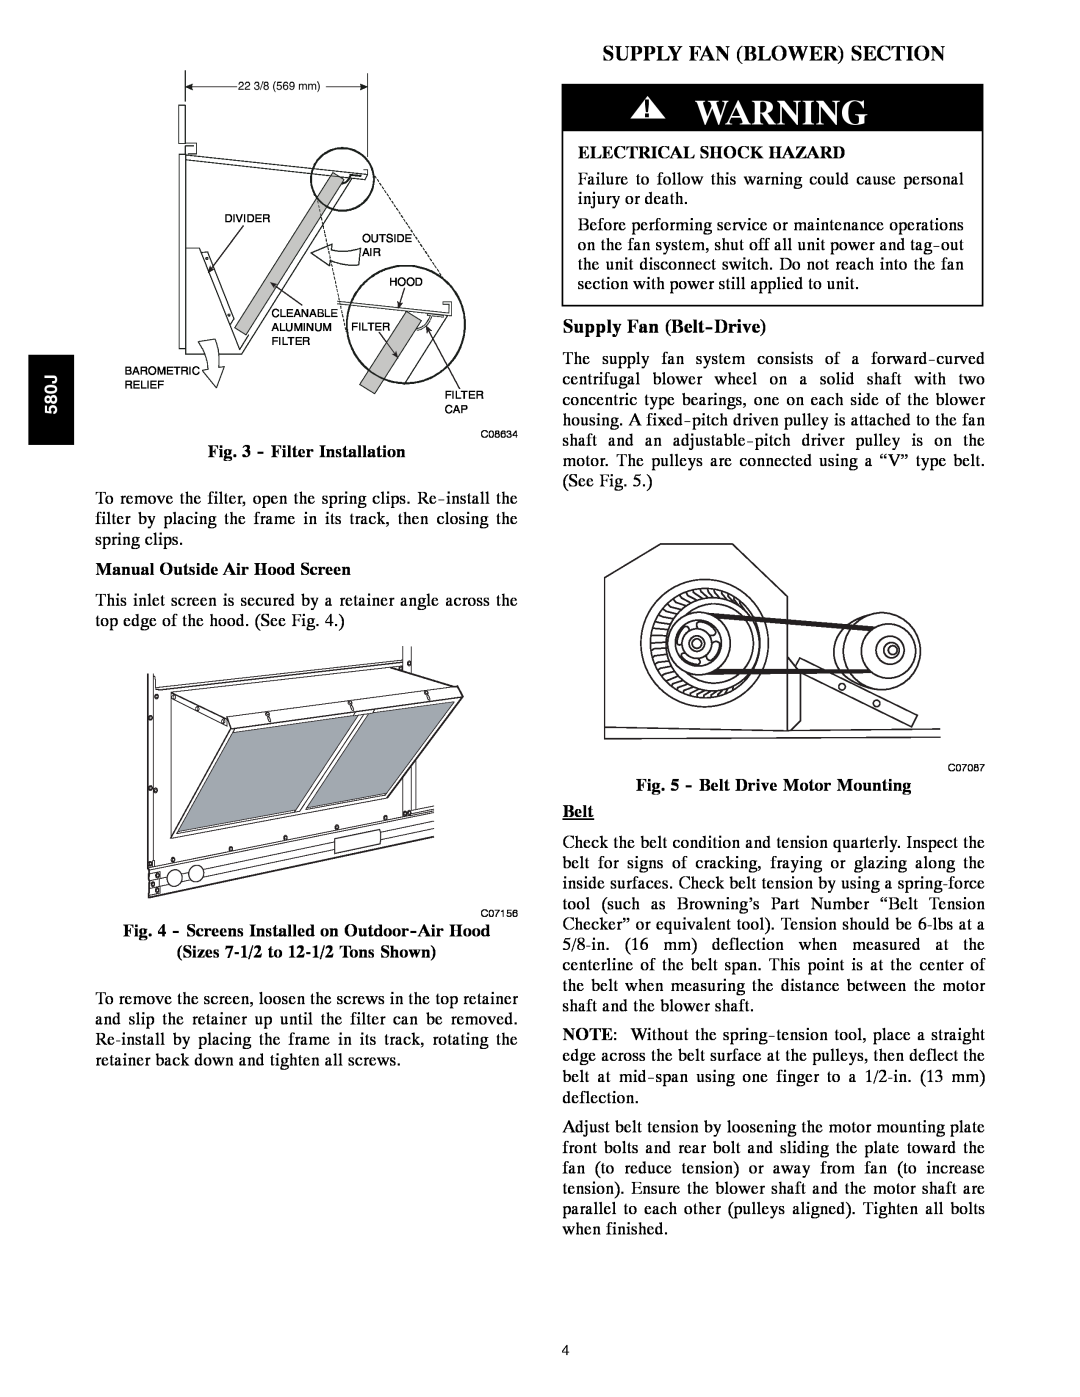 Bryant Supply Fan Blower Section, Supply Fan Belt-Drive, Filter Installation, Manual Outside Air Hood Screen, 580J 